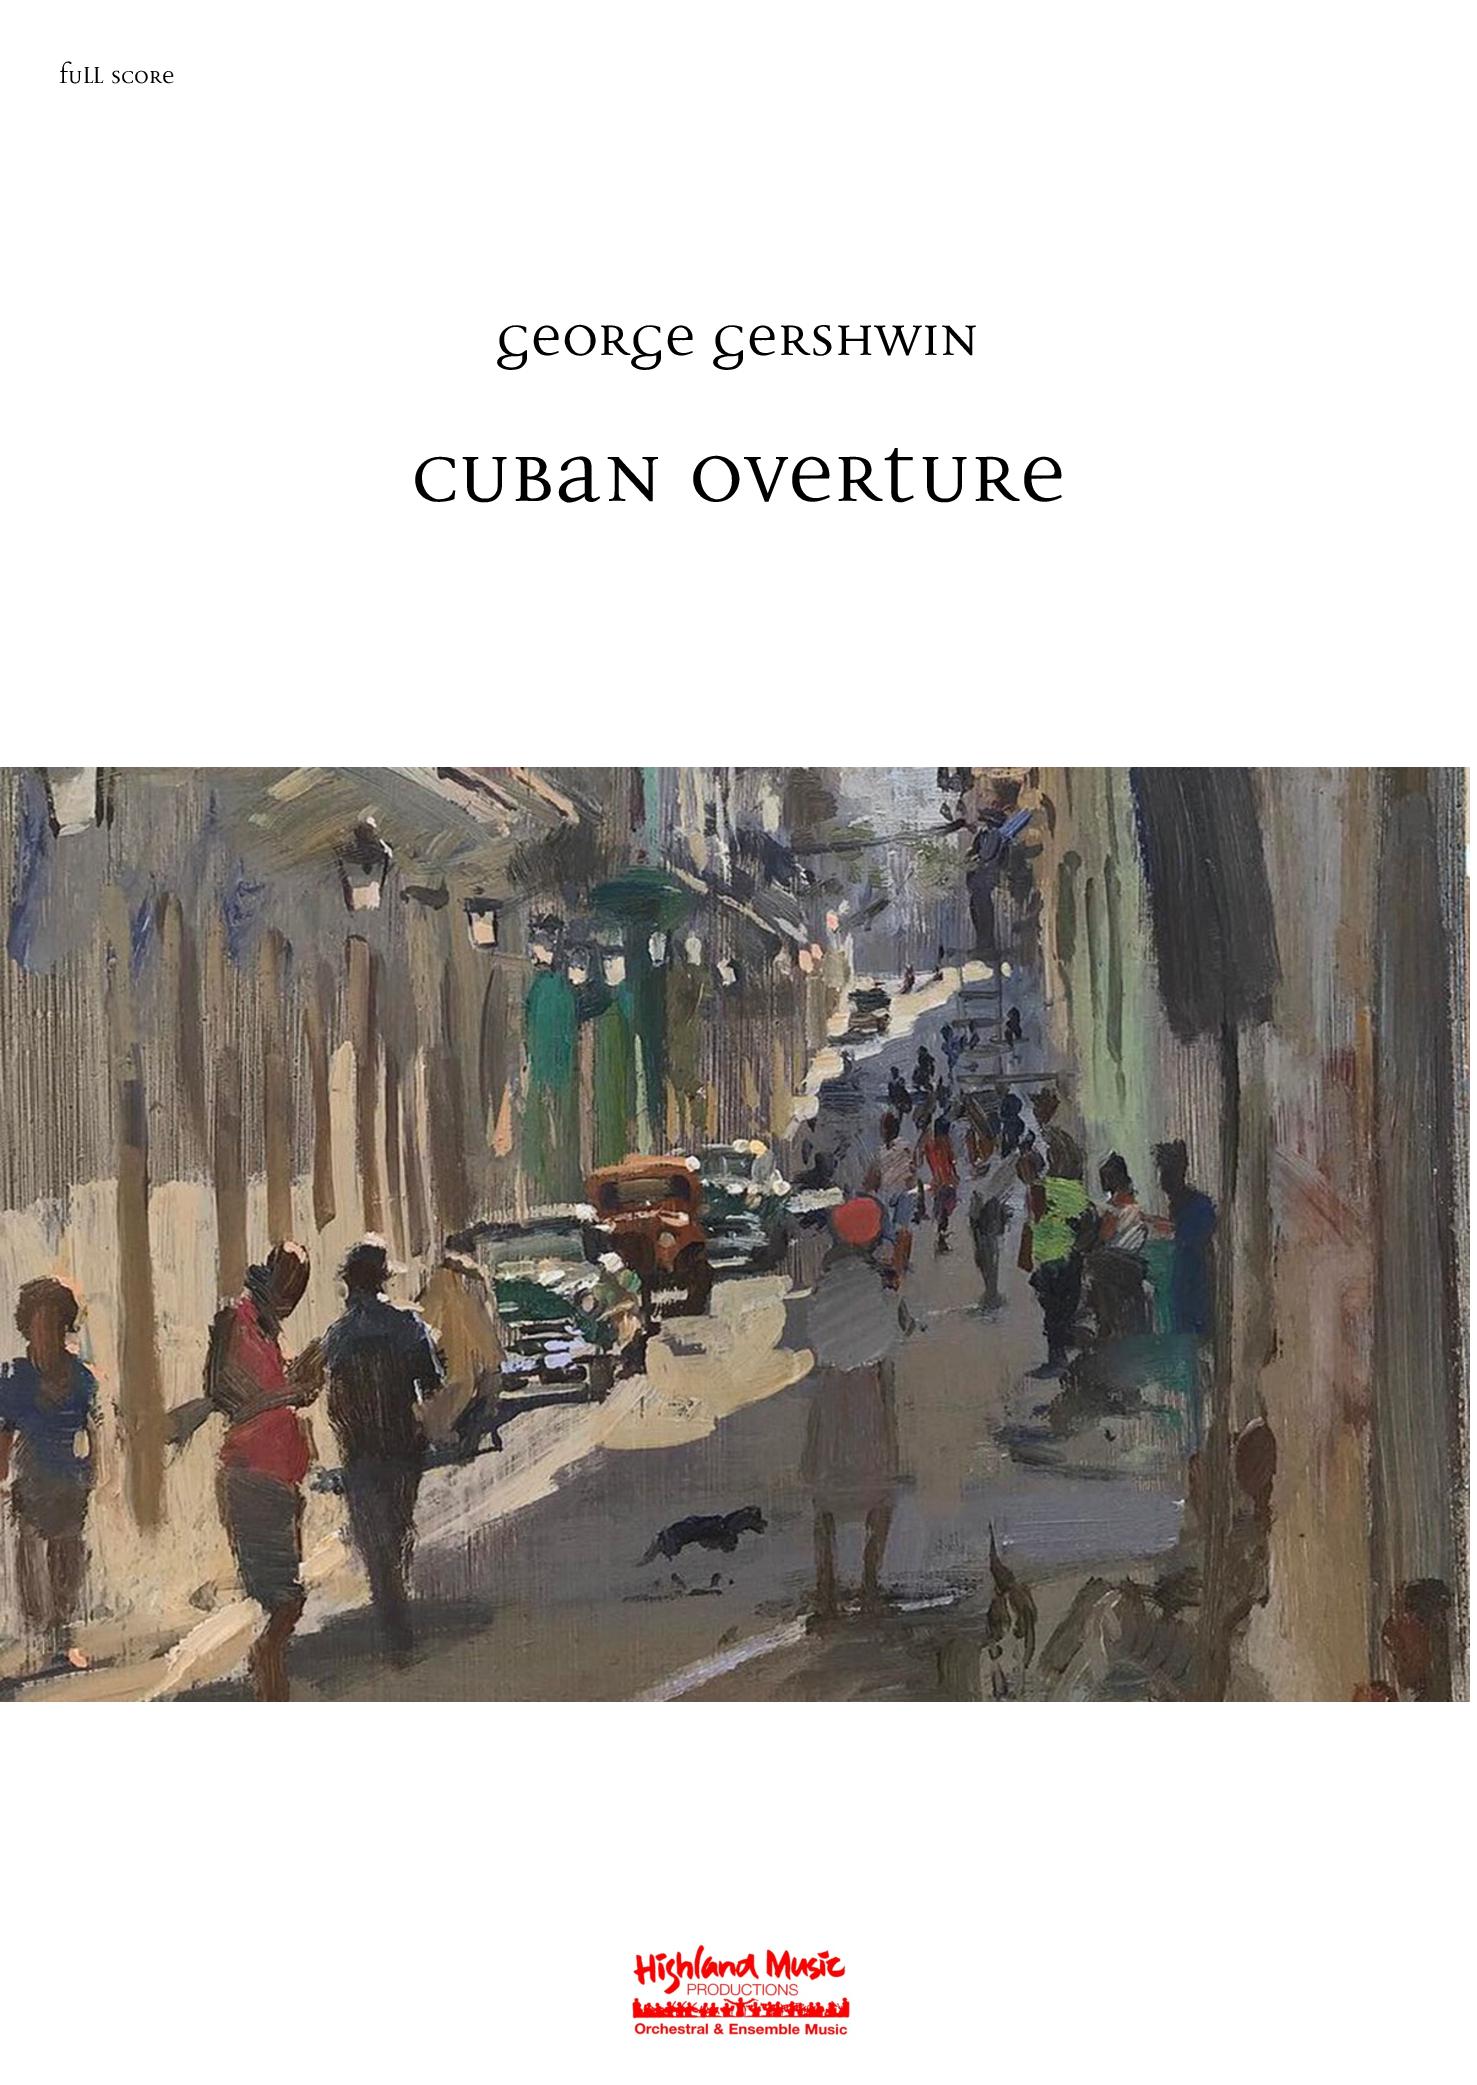 George Gershwin - Cuban Overture